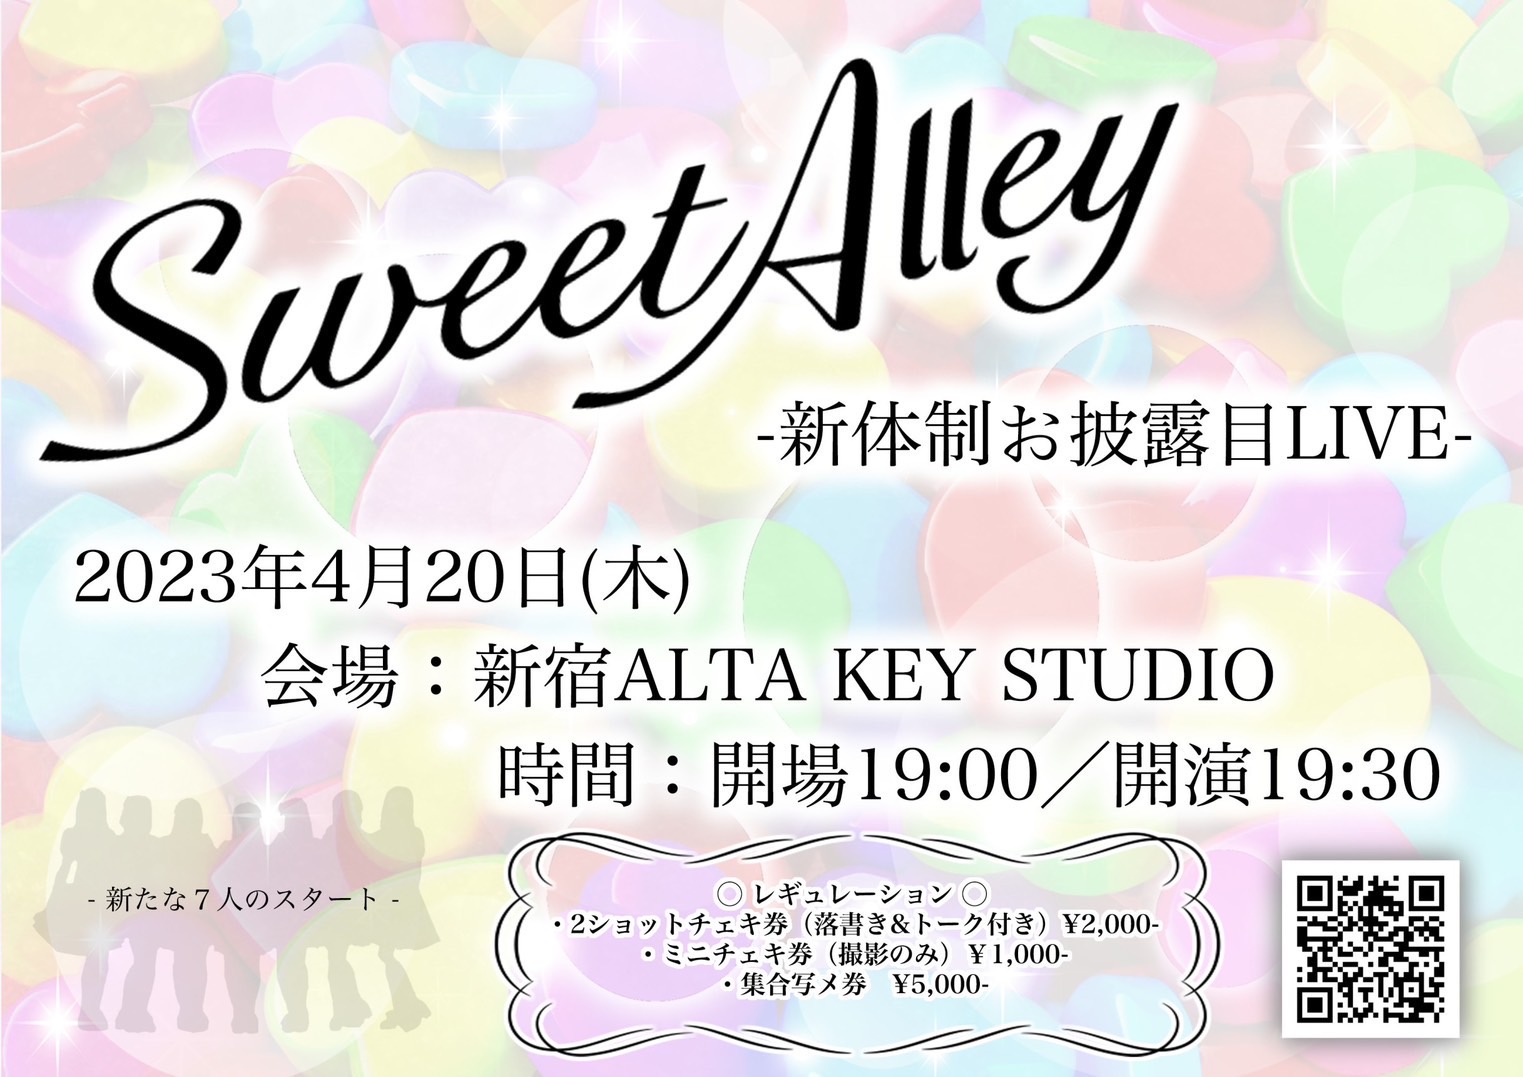 Sweet Alley -新体制お披露目LIVE-